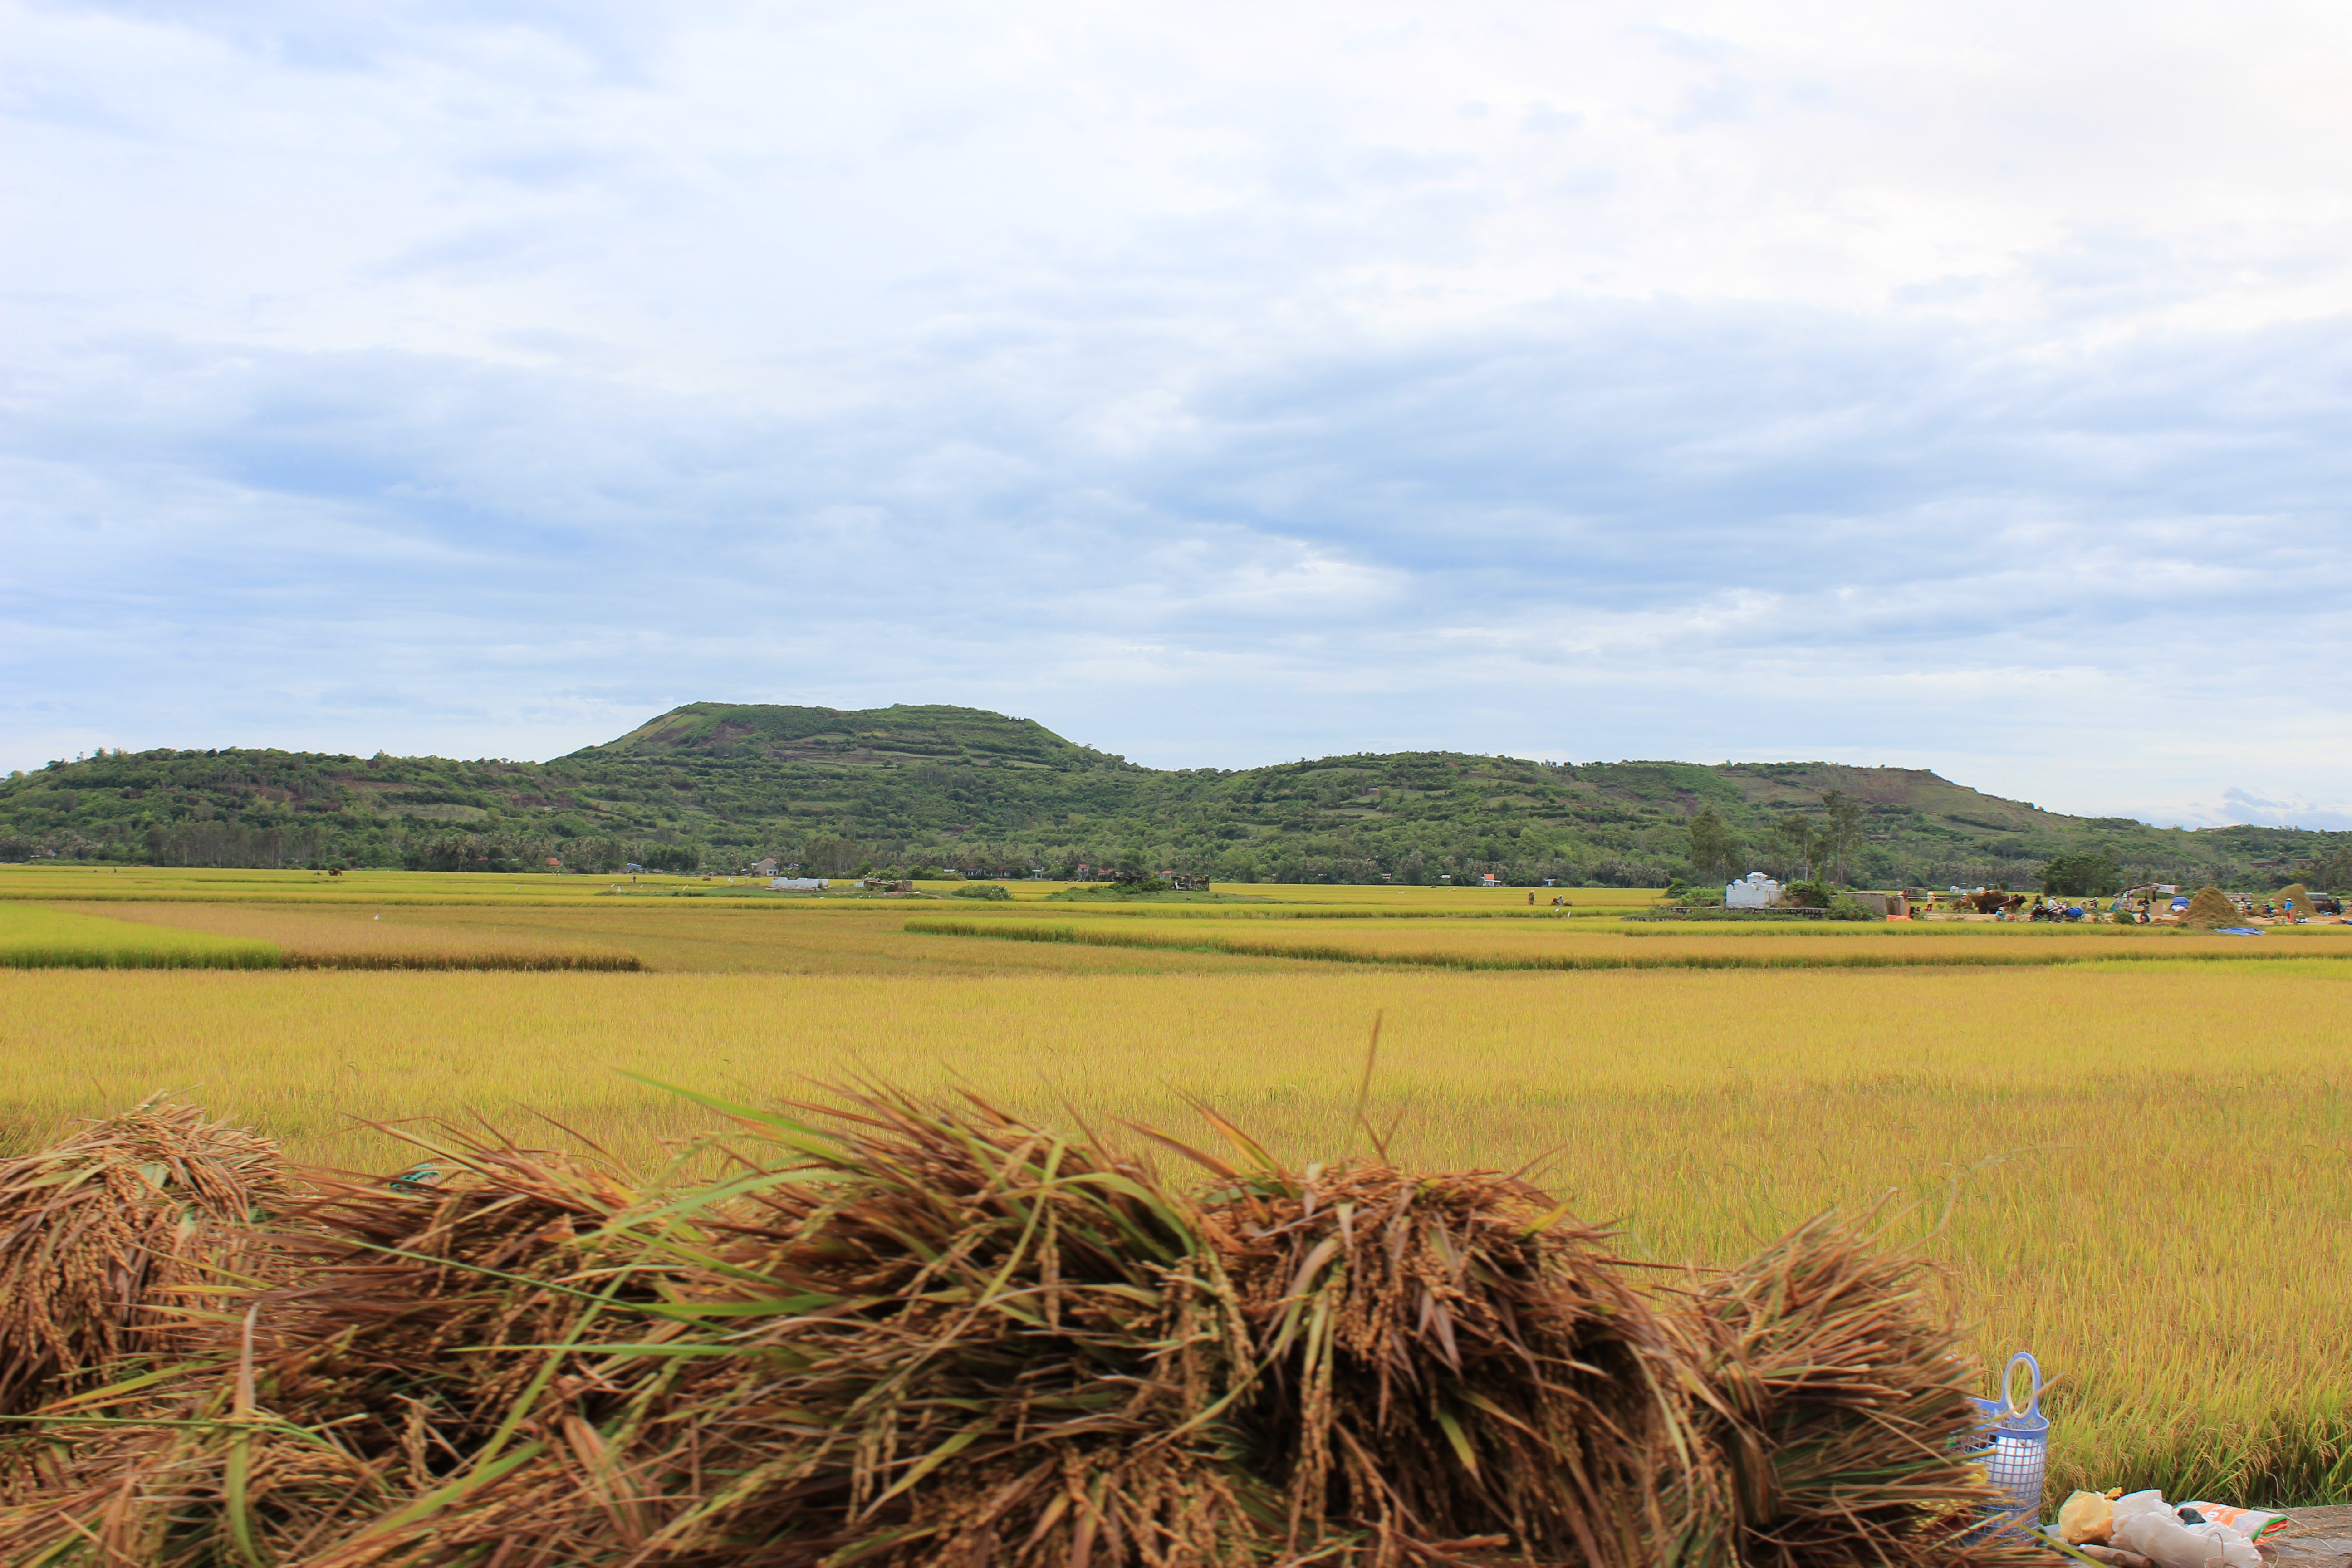 Rice field photo